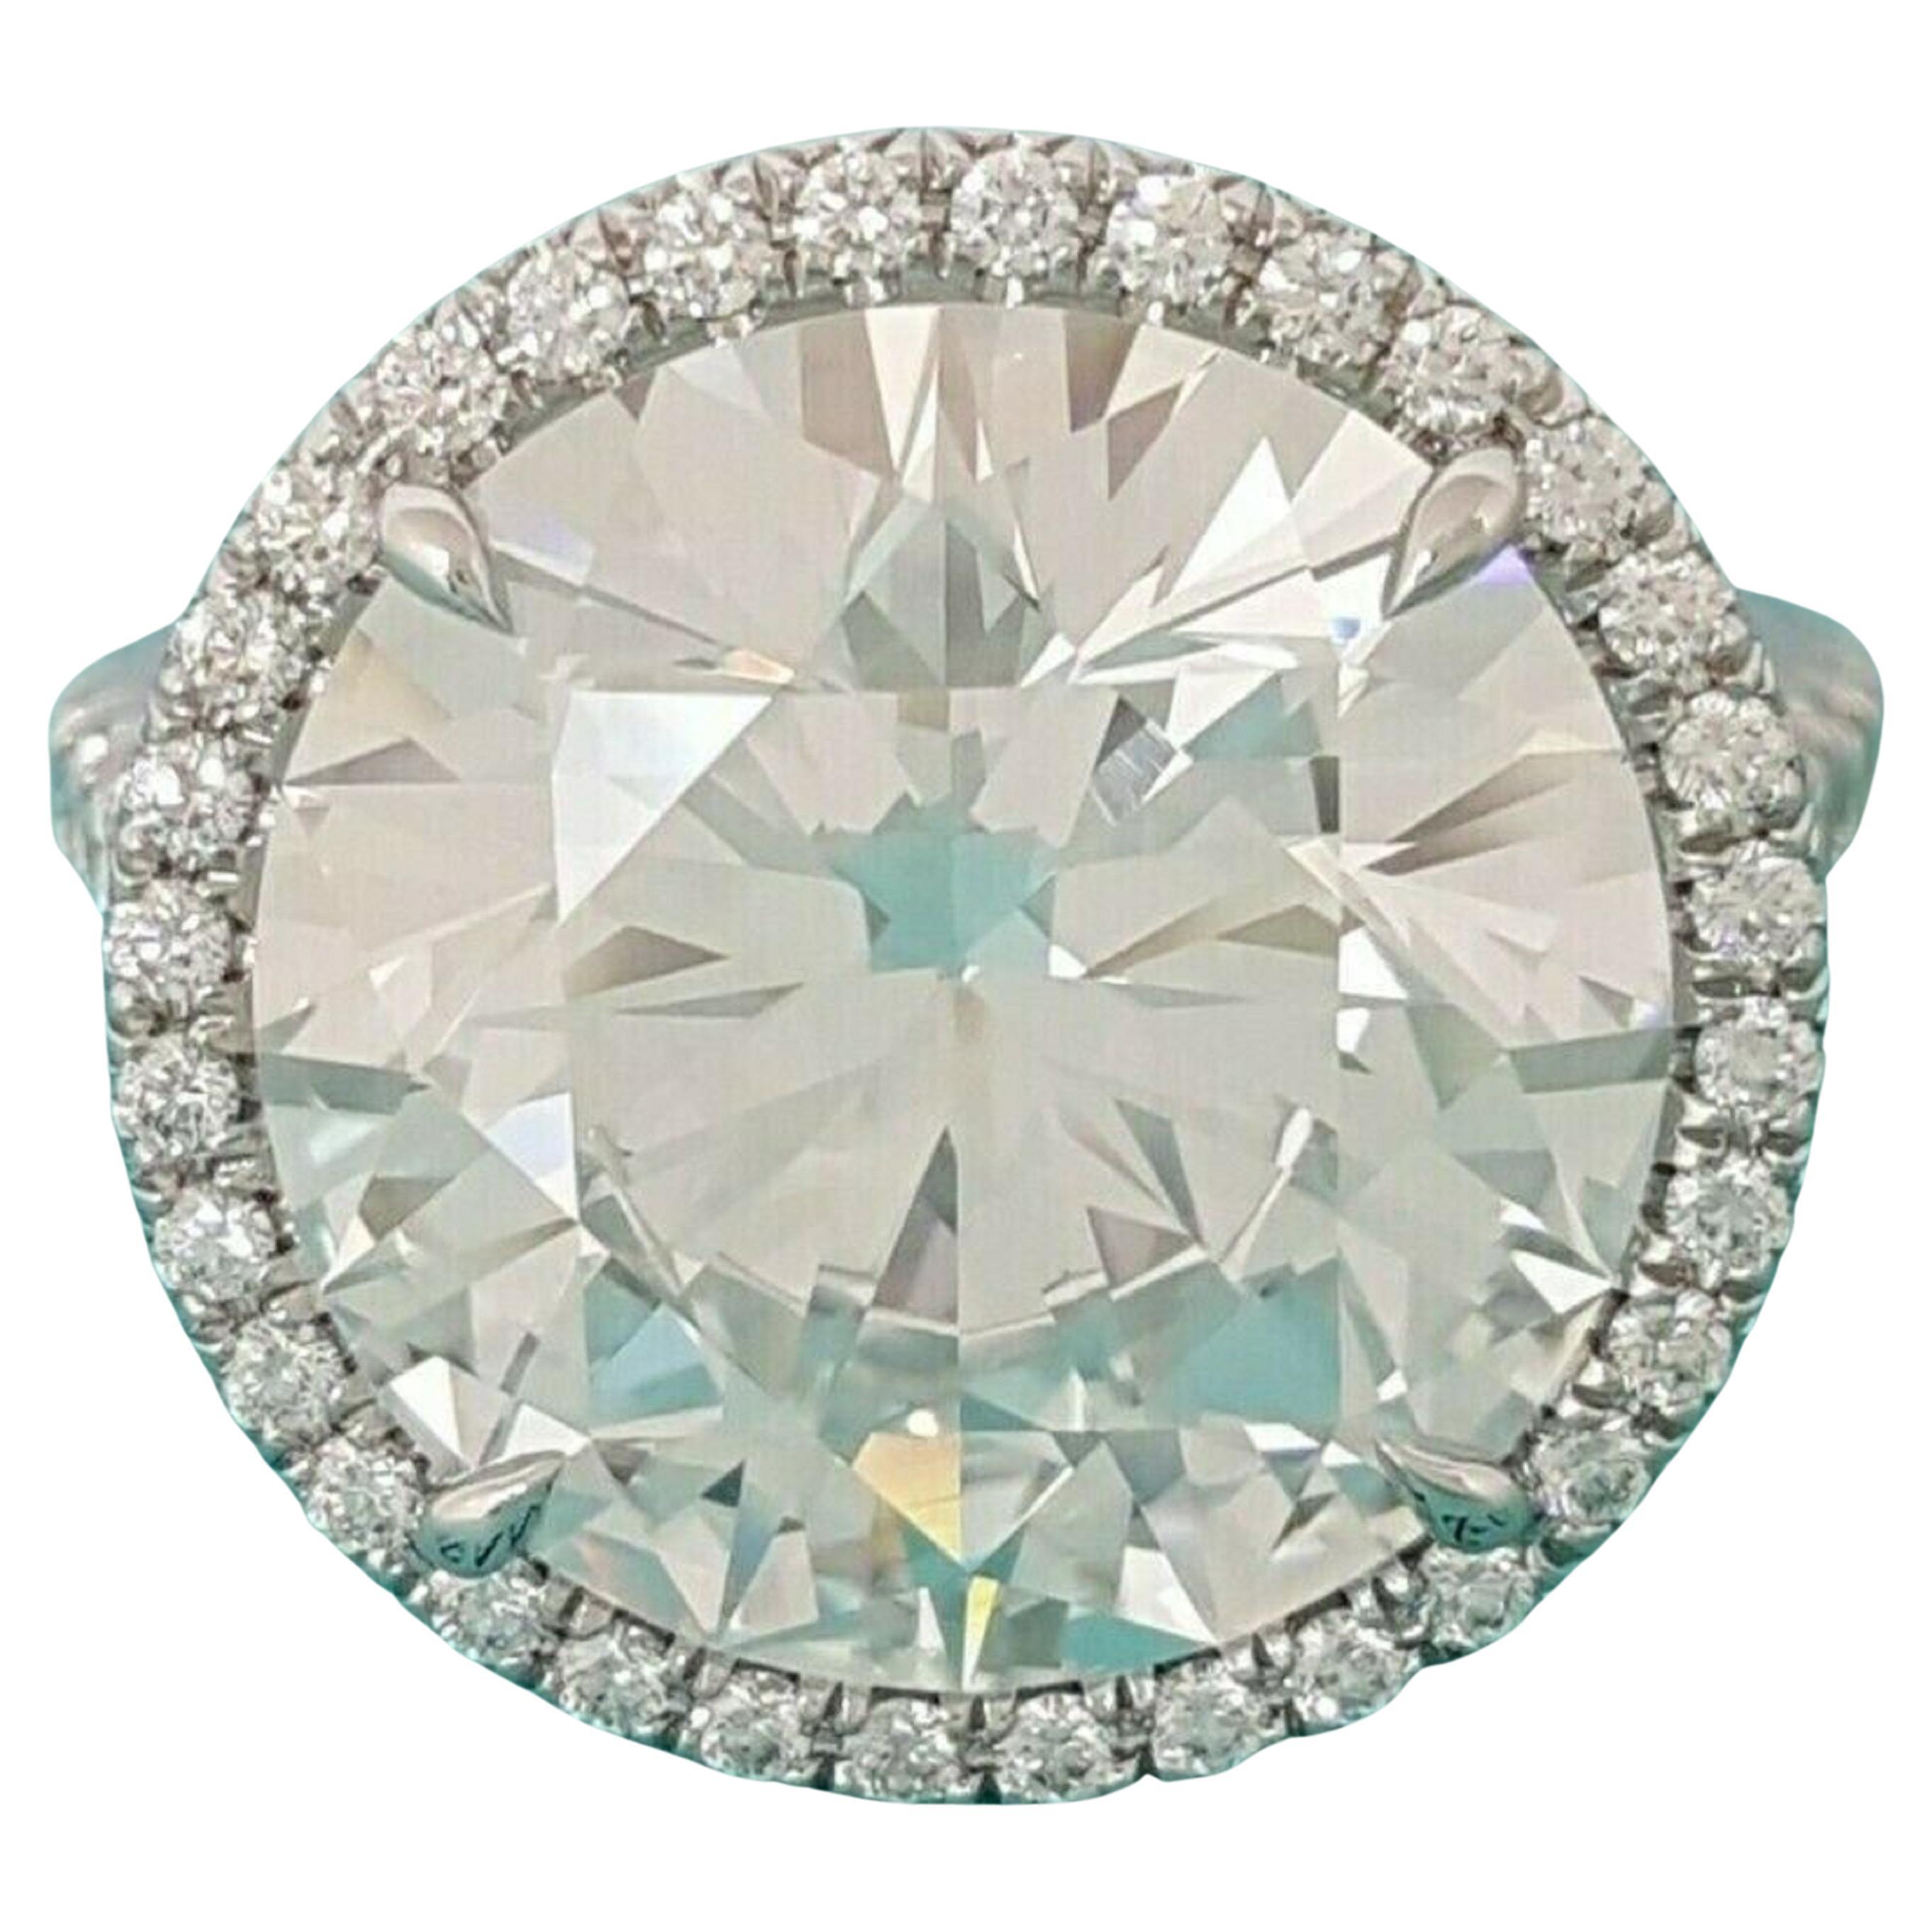 HRD Certified 18 Carat Round Brilliant Cut Diamond Ring